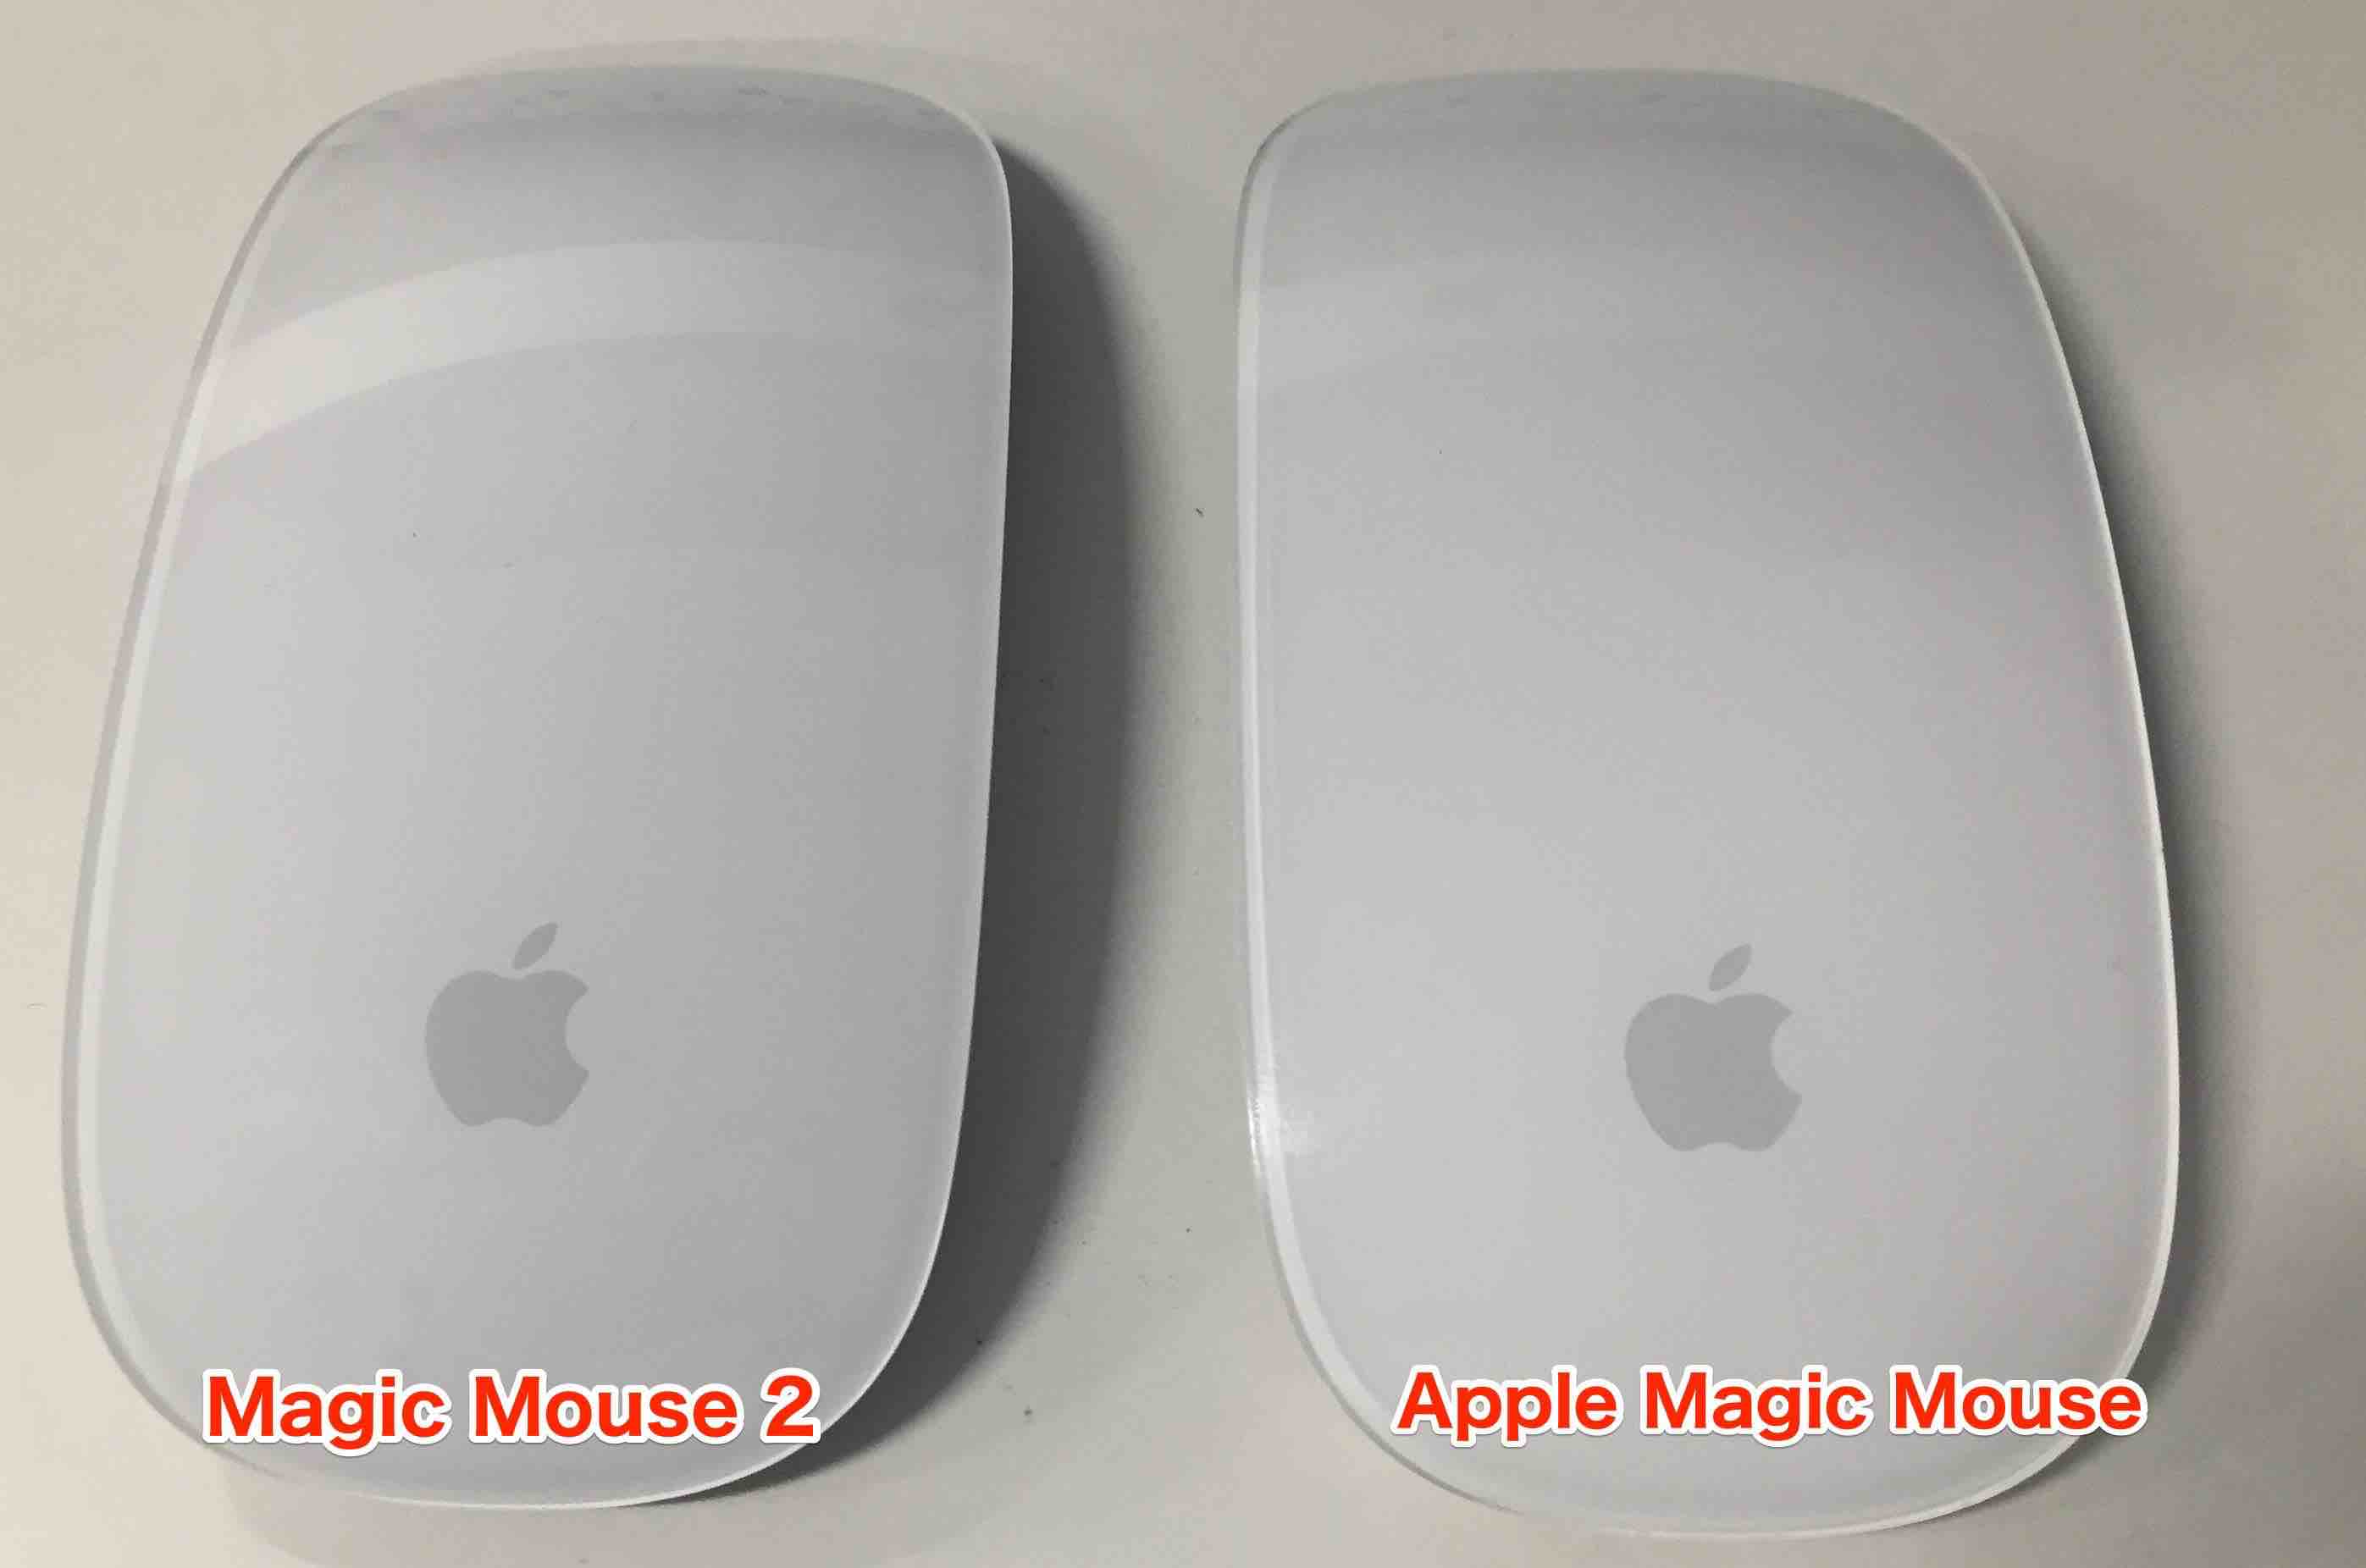 Apple Magic Mouse とMagic Mouse 2を比べる